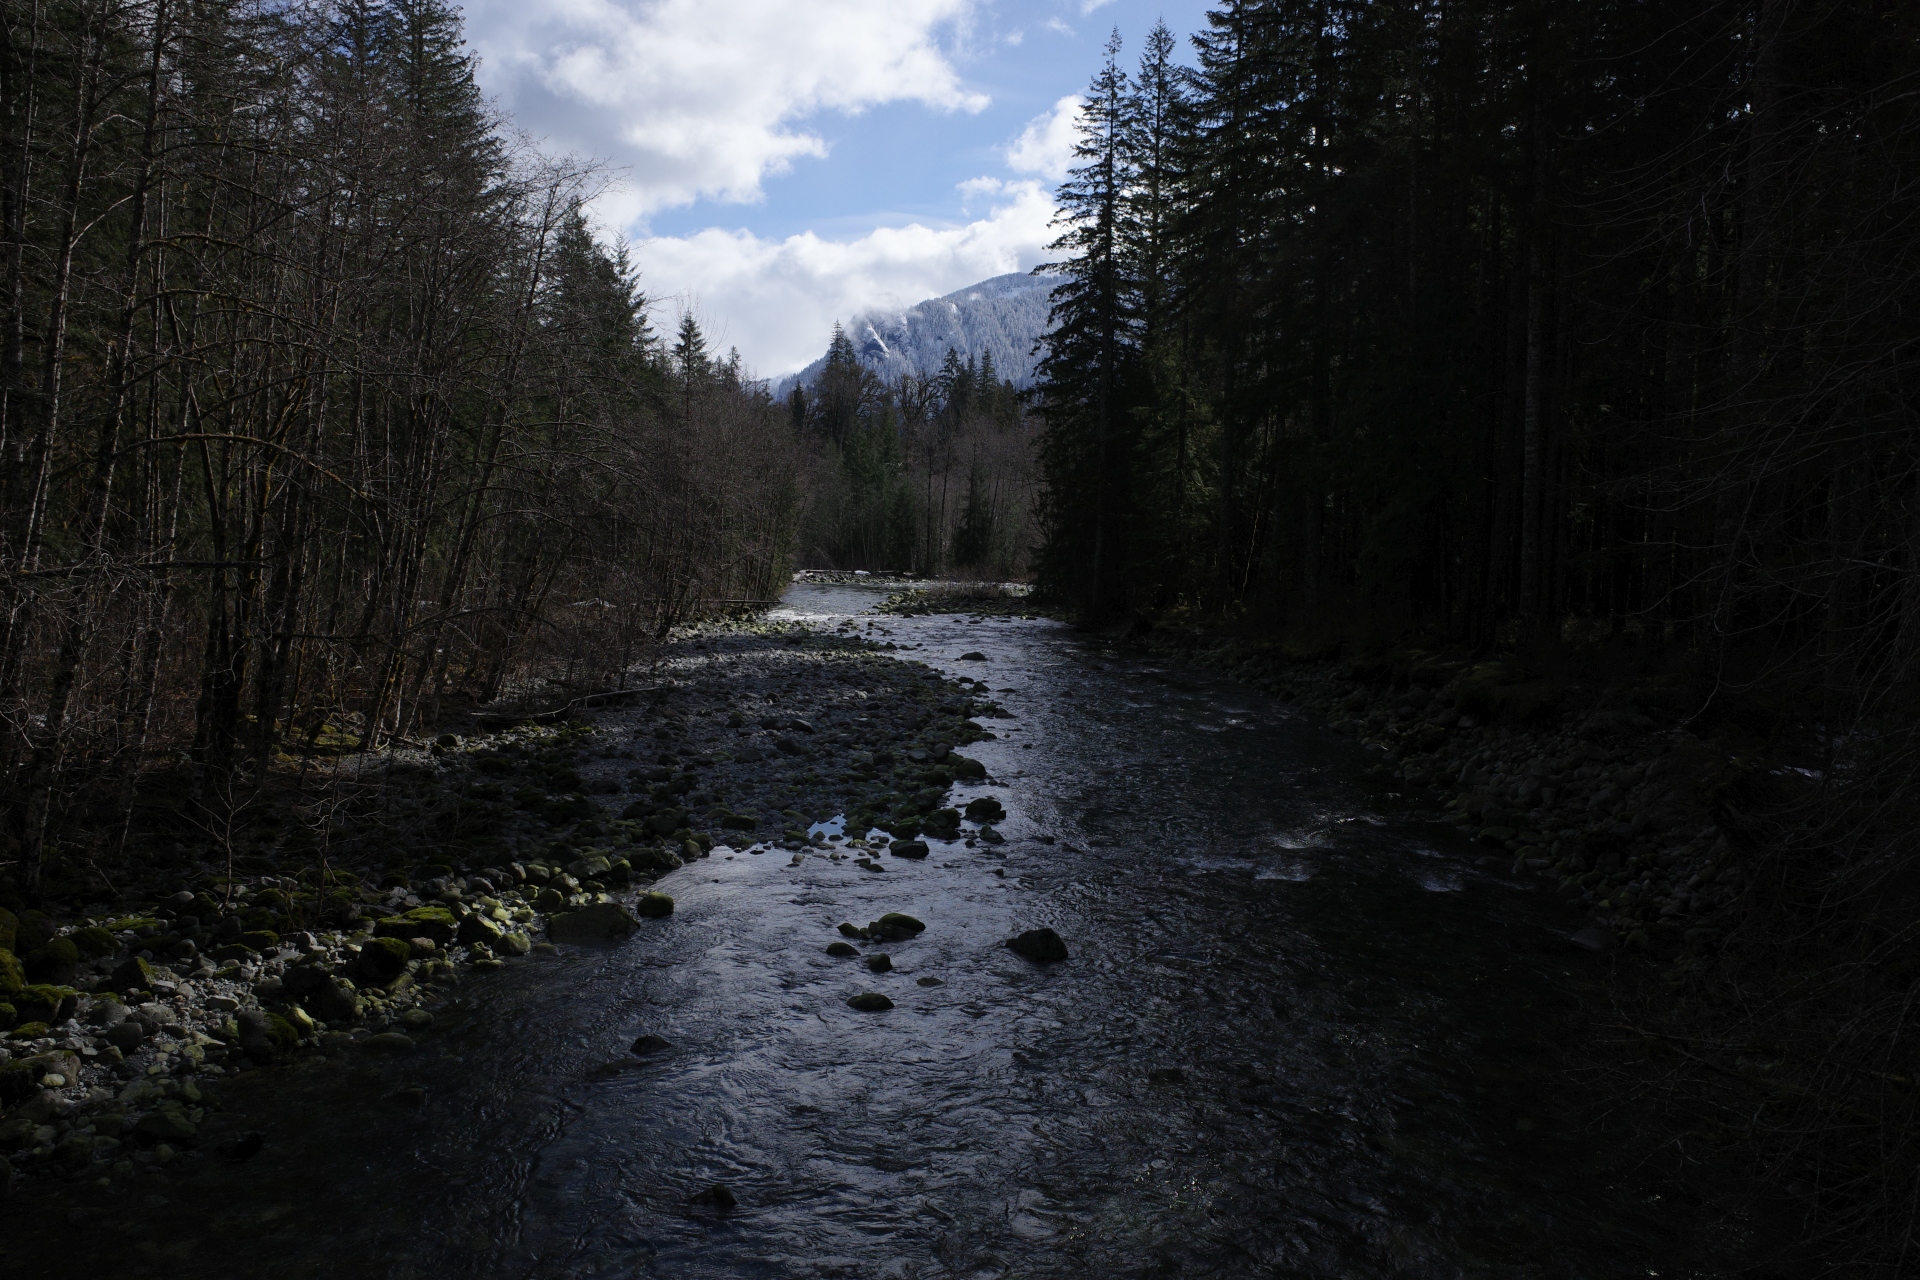 I crossed this river (via bridge) on the way to the trailhead